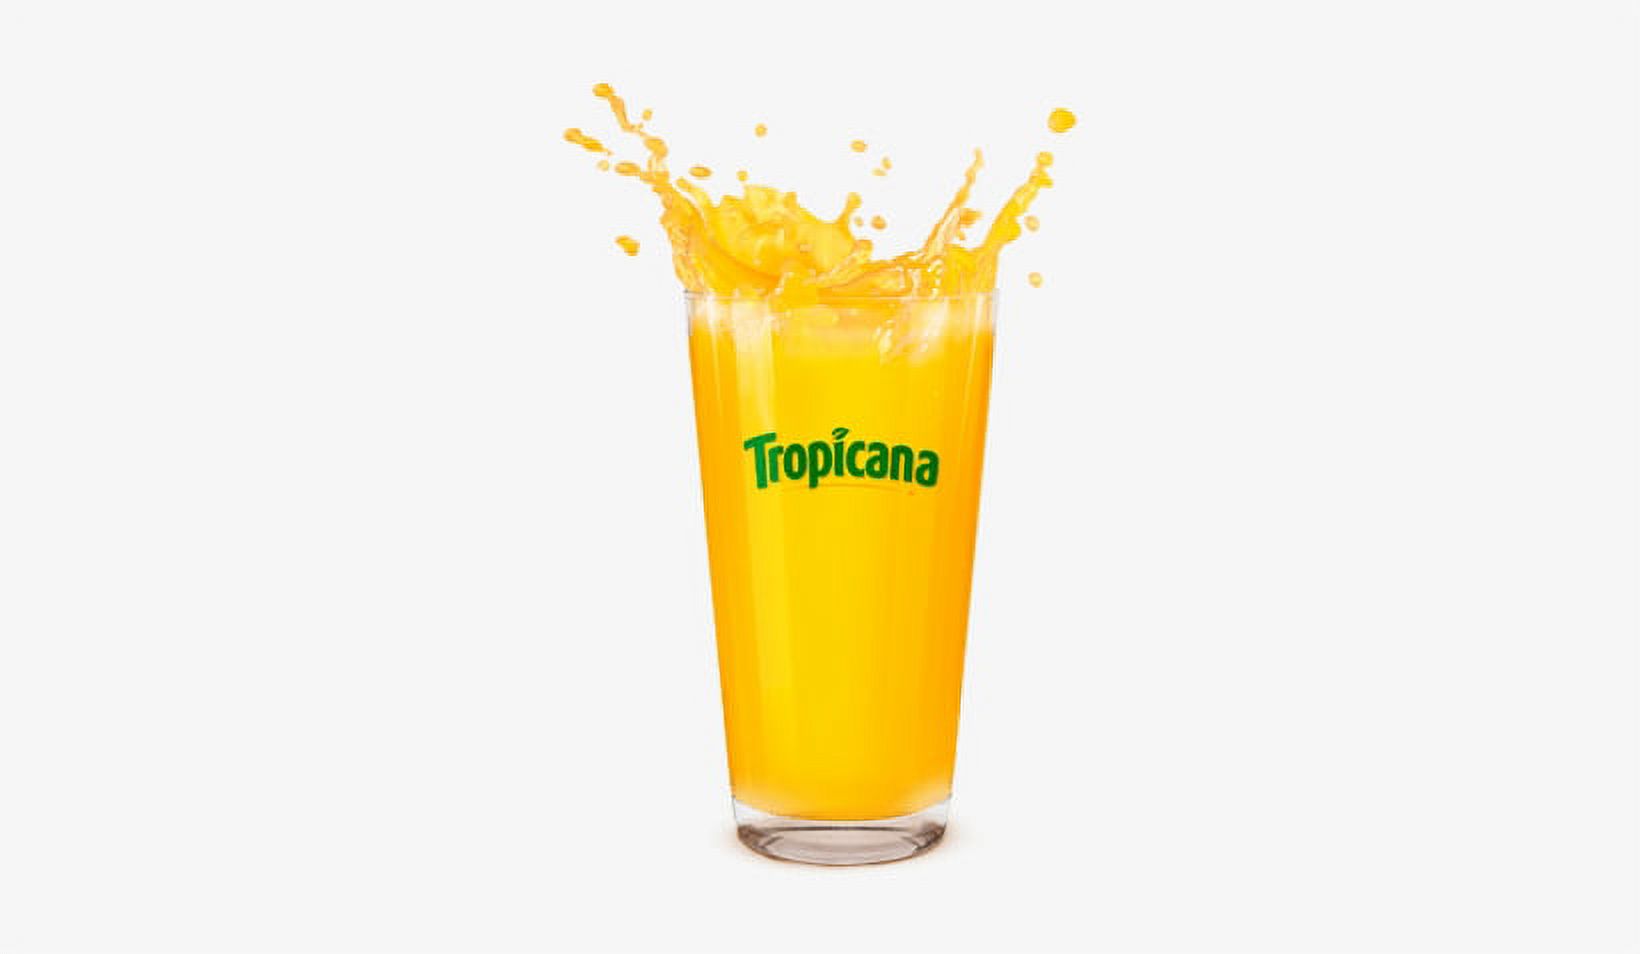 Tropicana Pure Premium No Pulp 100% Orange Juice, 12 oz, Bottle, Fruit Juice - image 5 of 6